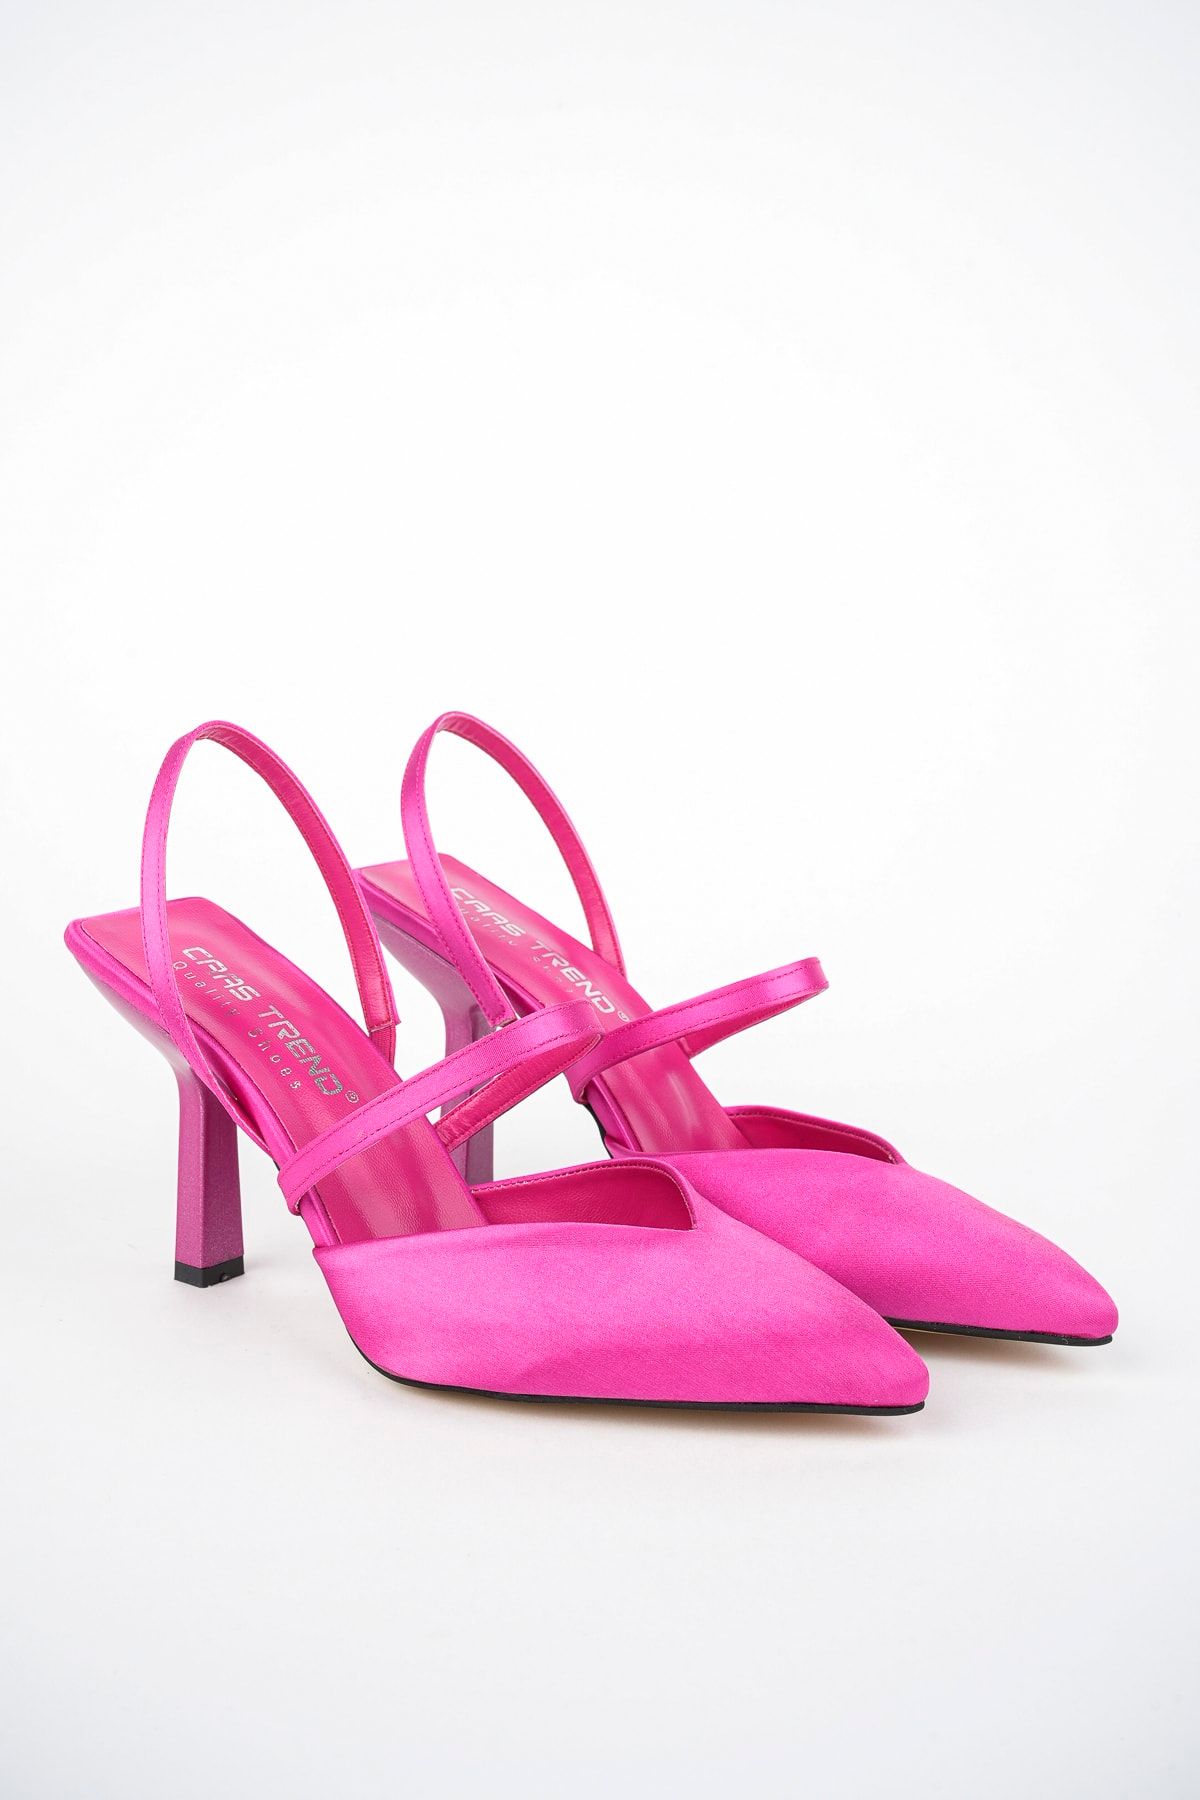 New Christian Dior Hot Pink Satin Shoes Stillettos Heels SZ 7.5 US 38 EUR |  eBay